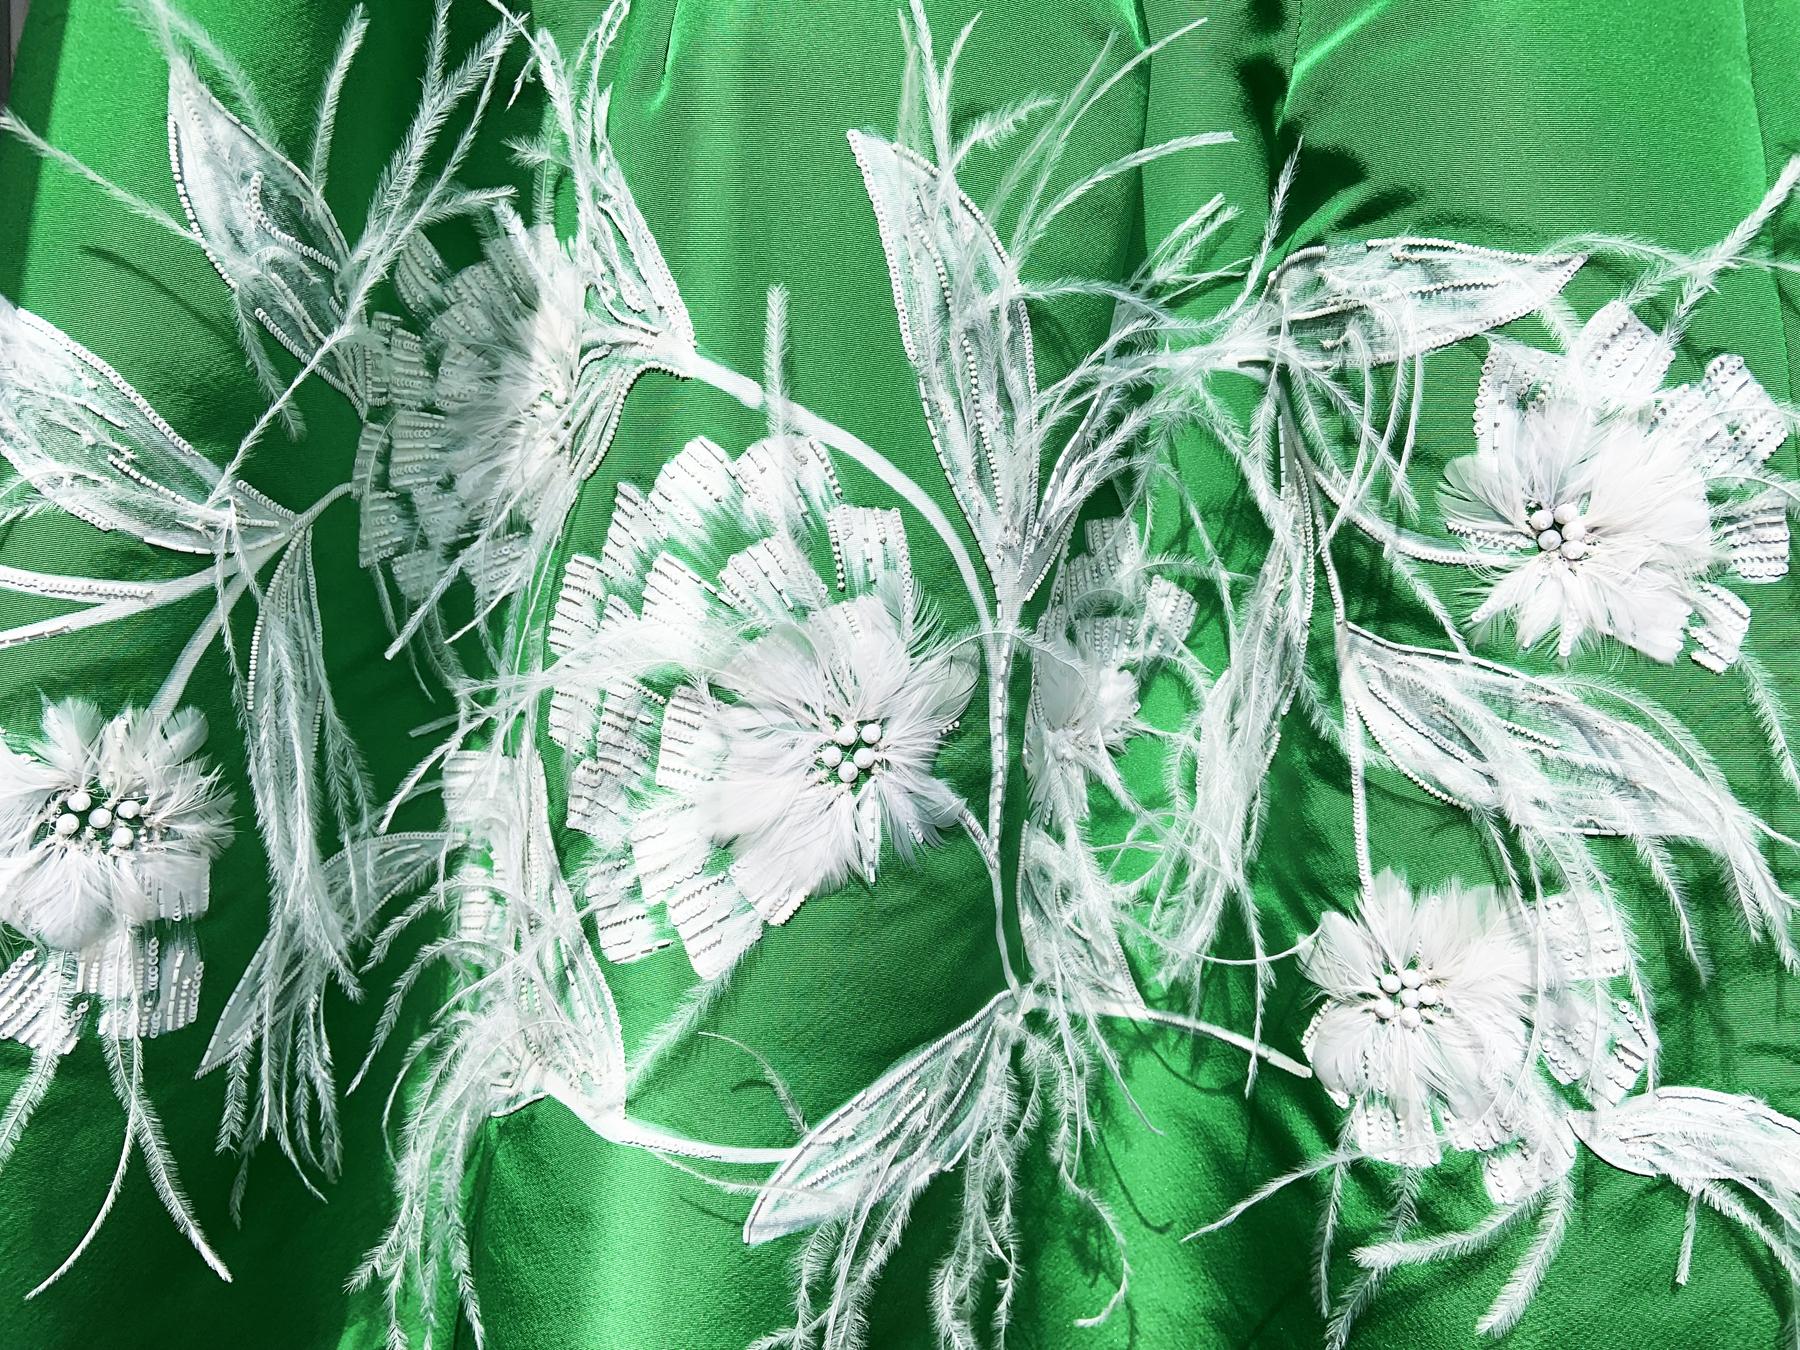 NWT Oscar de la Renta $5490 S/S 2015 Green Silk Taffeta Feather Beads Dress US 6 For Sale 2